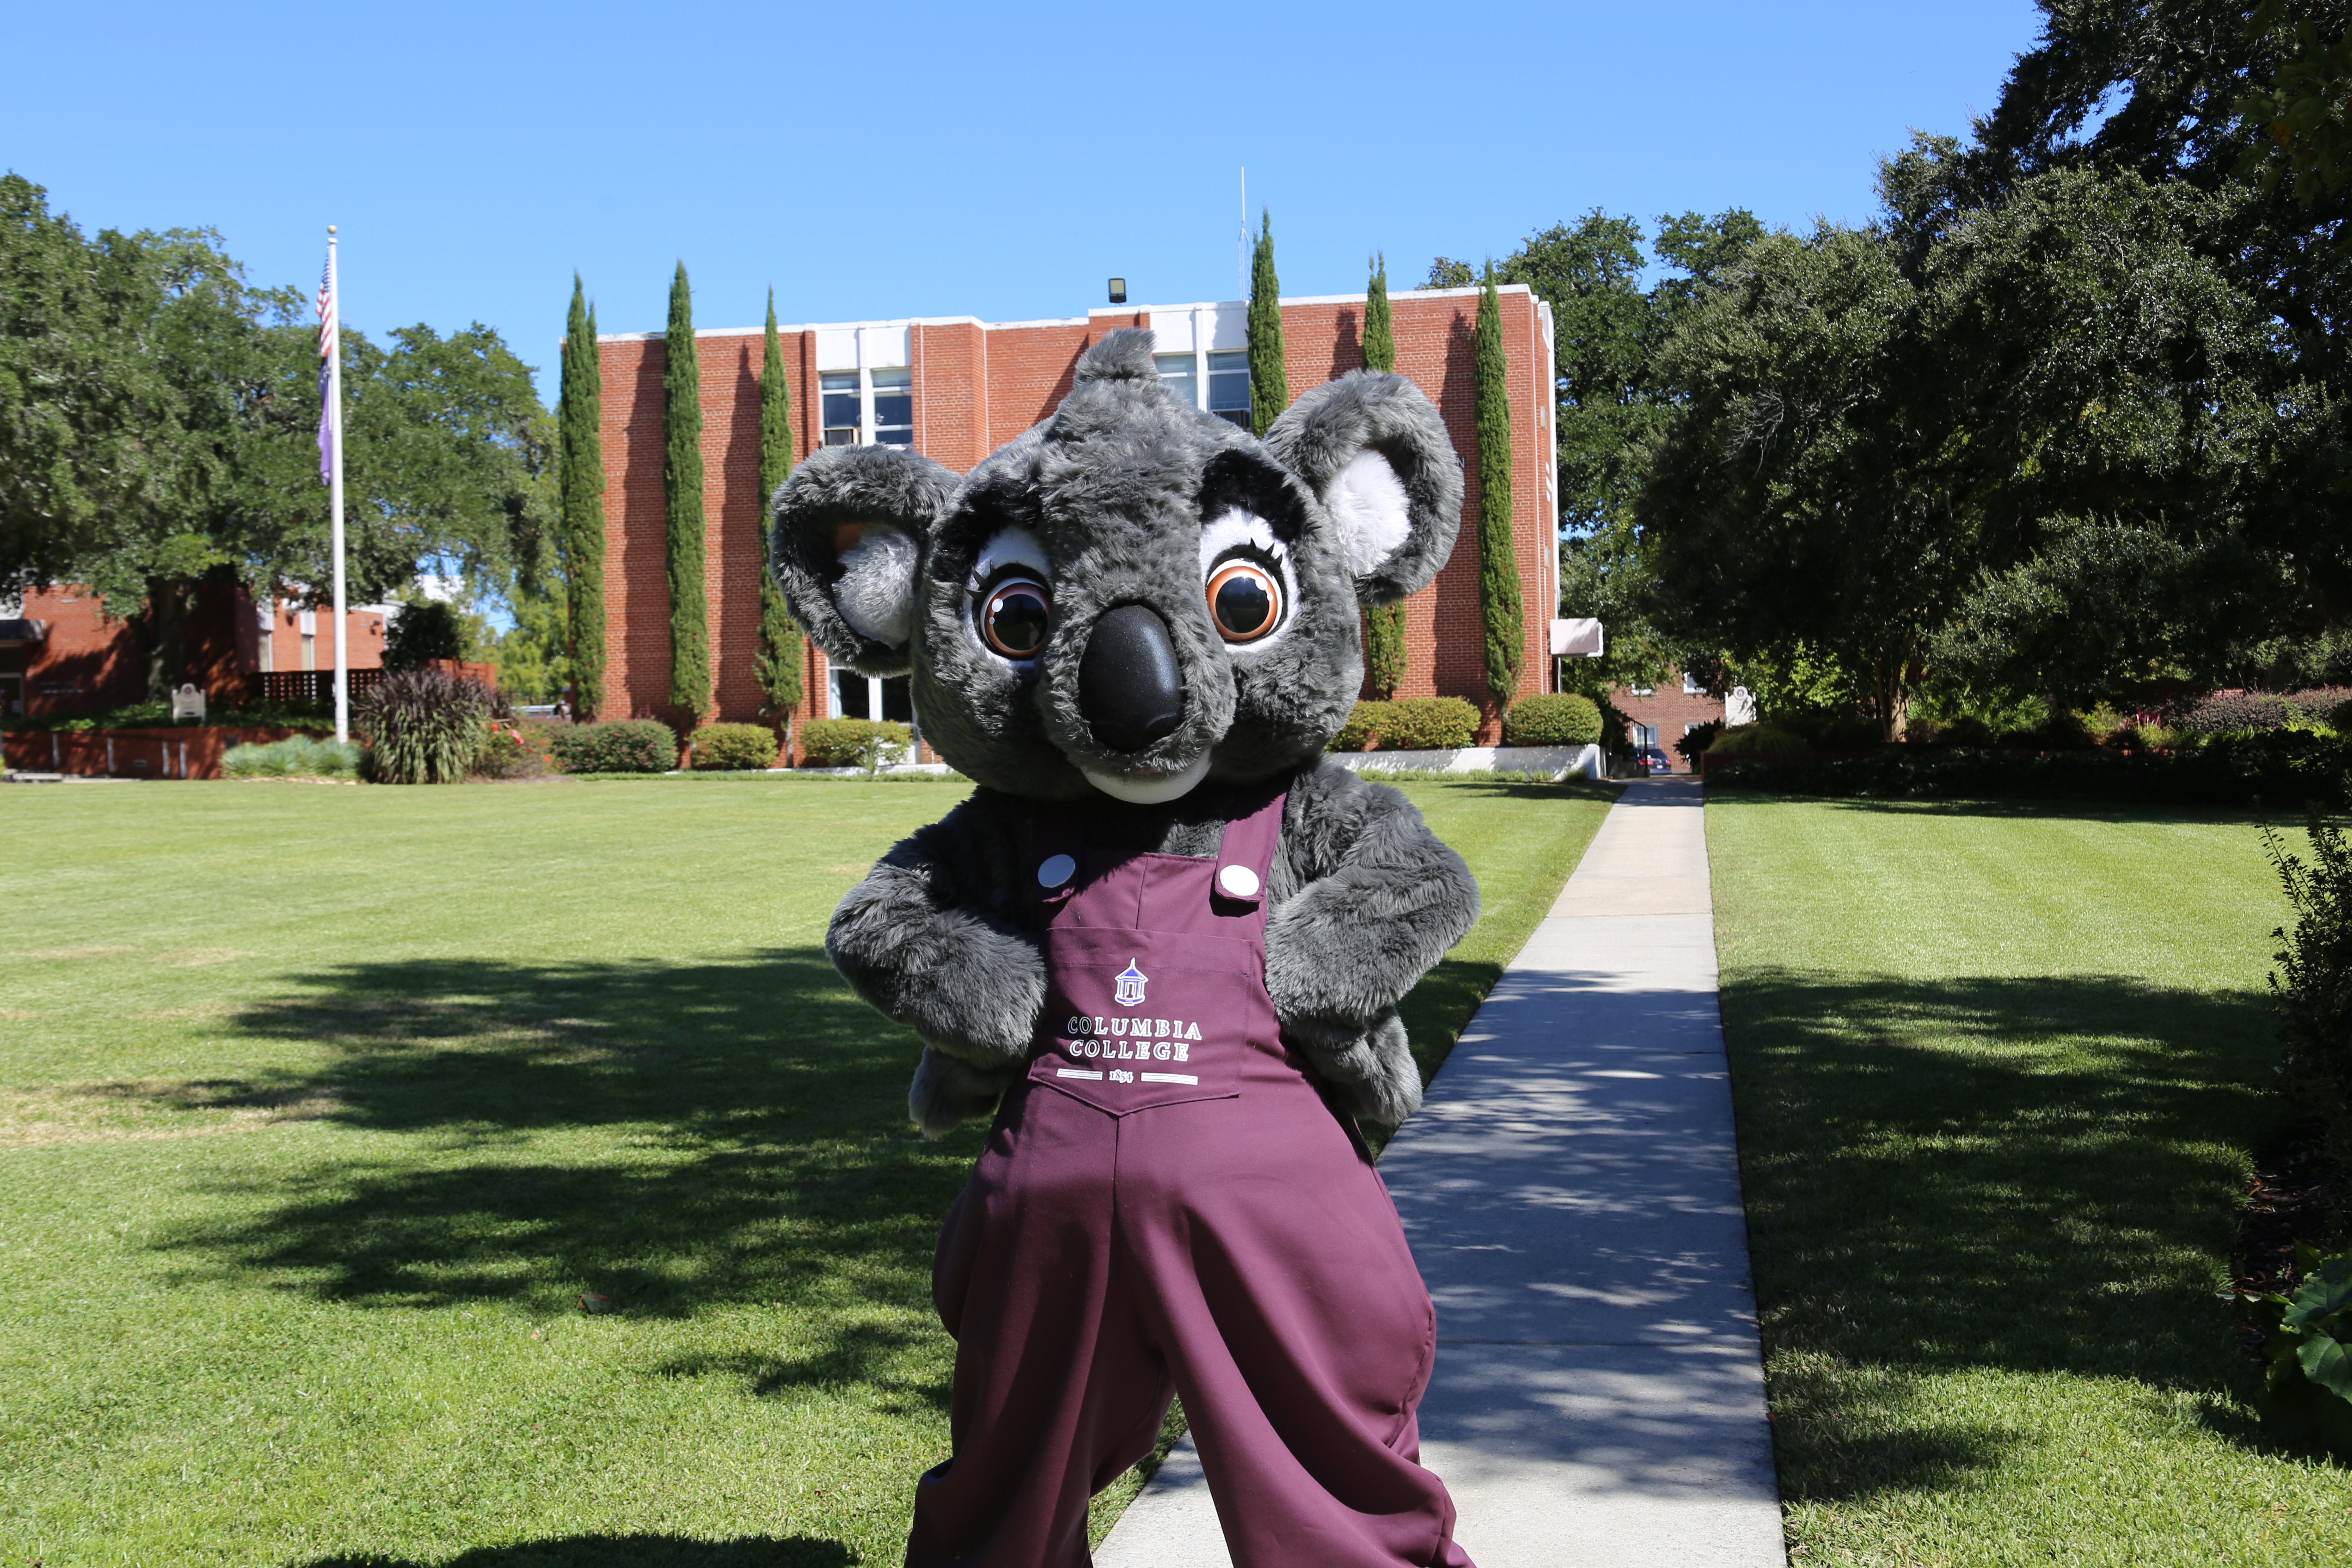 An image of the Columbia College Mascot, CeCe the Koala.